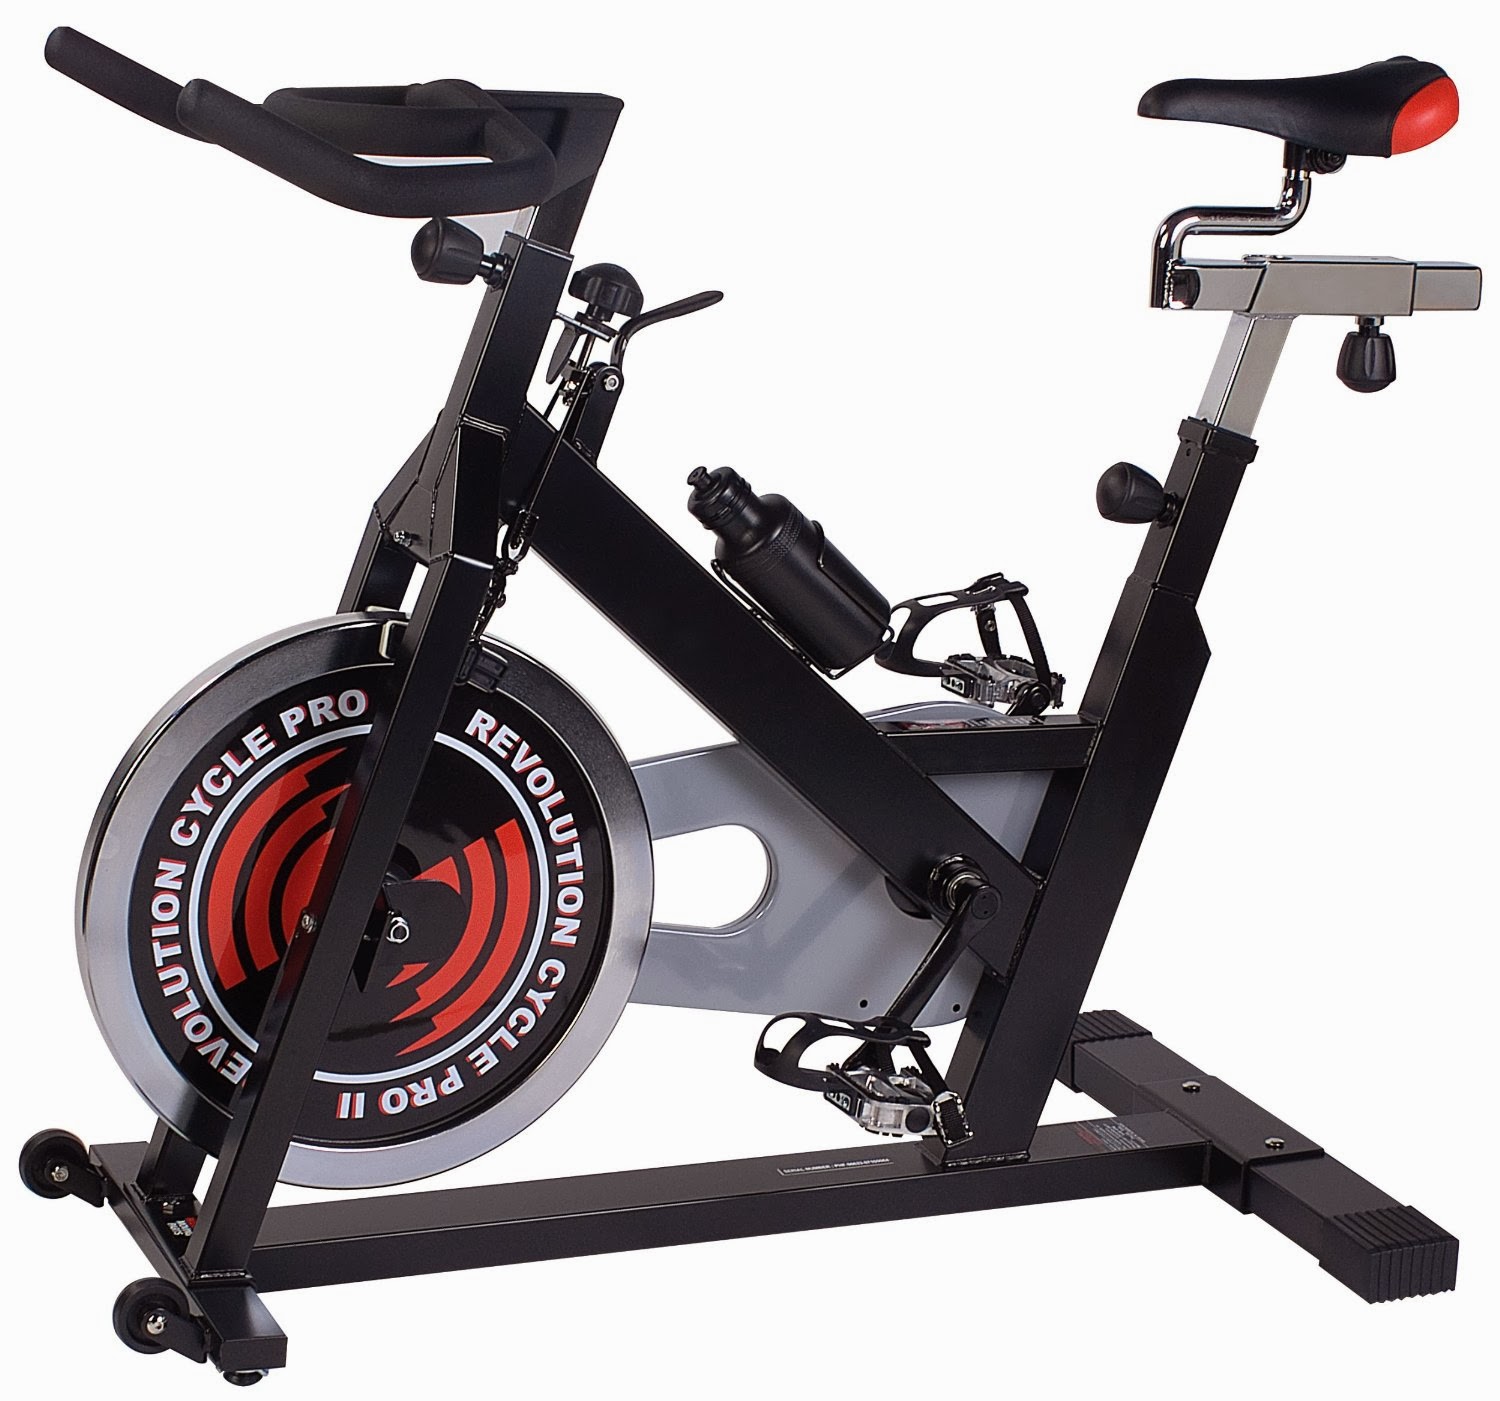 Phoenix 98623 Revolution Cycle Pro II Exercise Bike, review of features, spin bike, indoor road bike